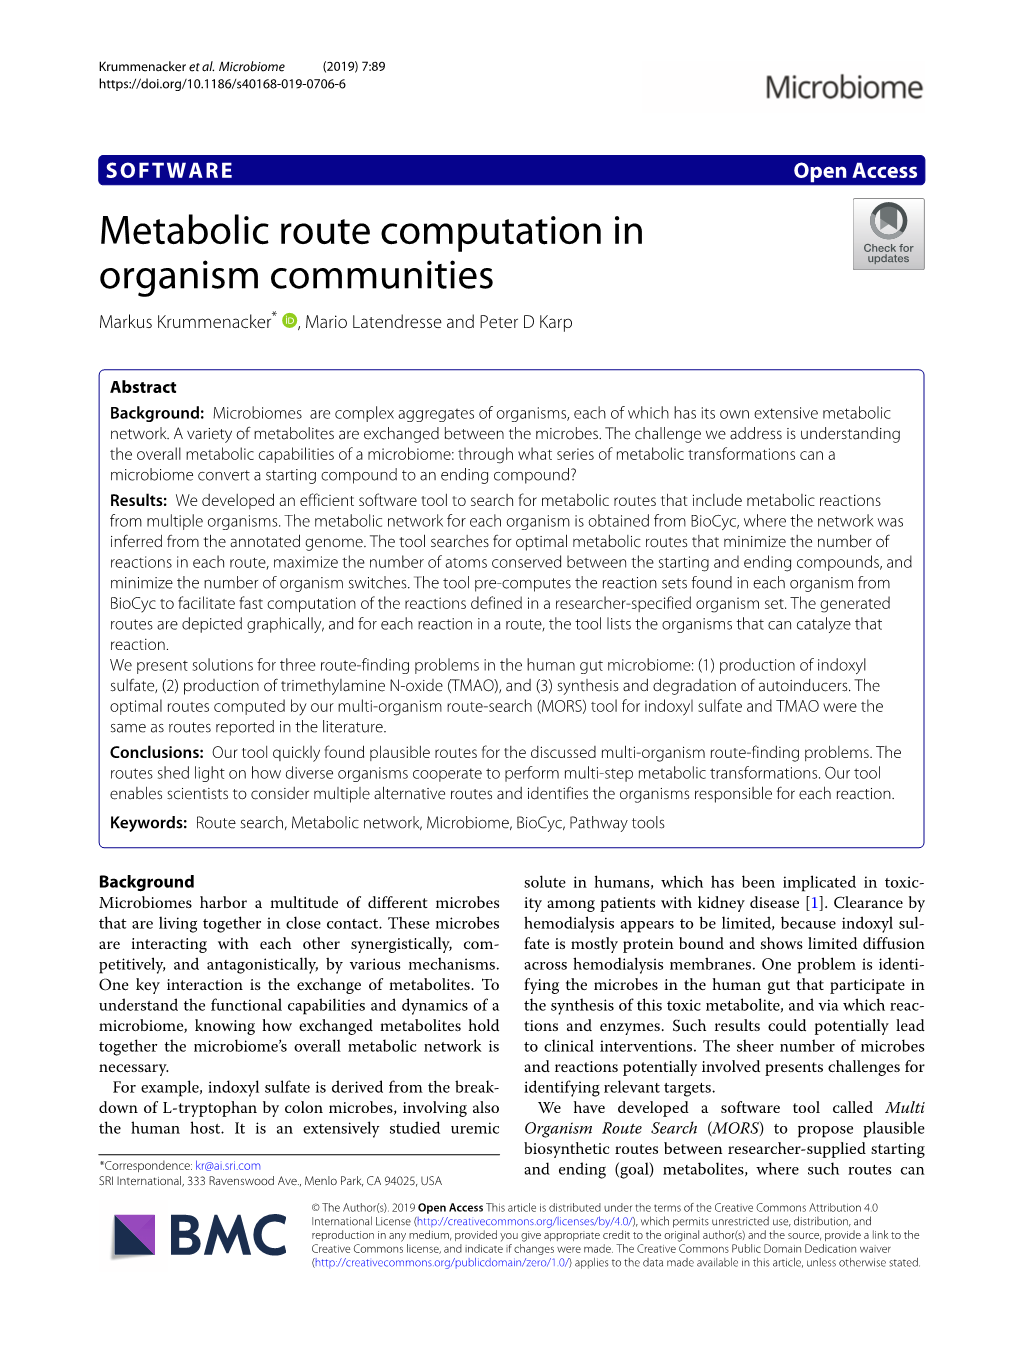 Metabolic Route Computation in Organism Communities Markus Krummenacker* , Mario Latendresse and Peter D Karp